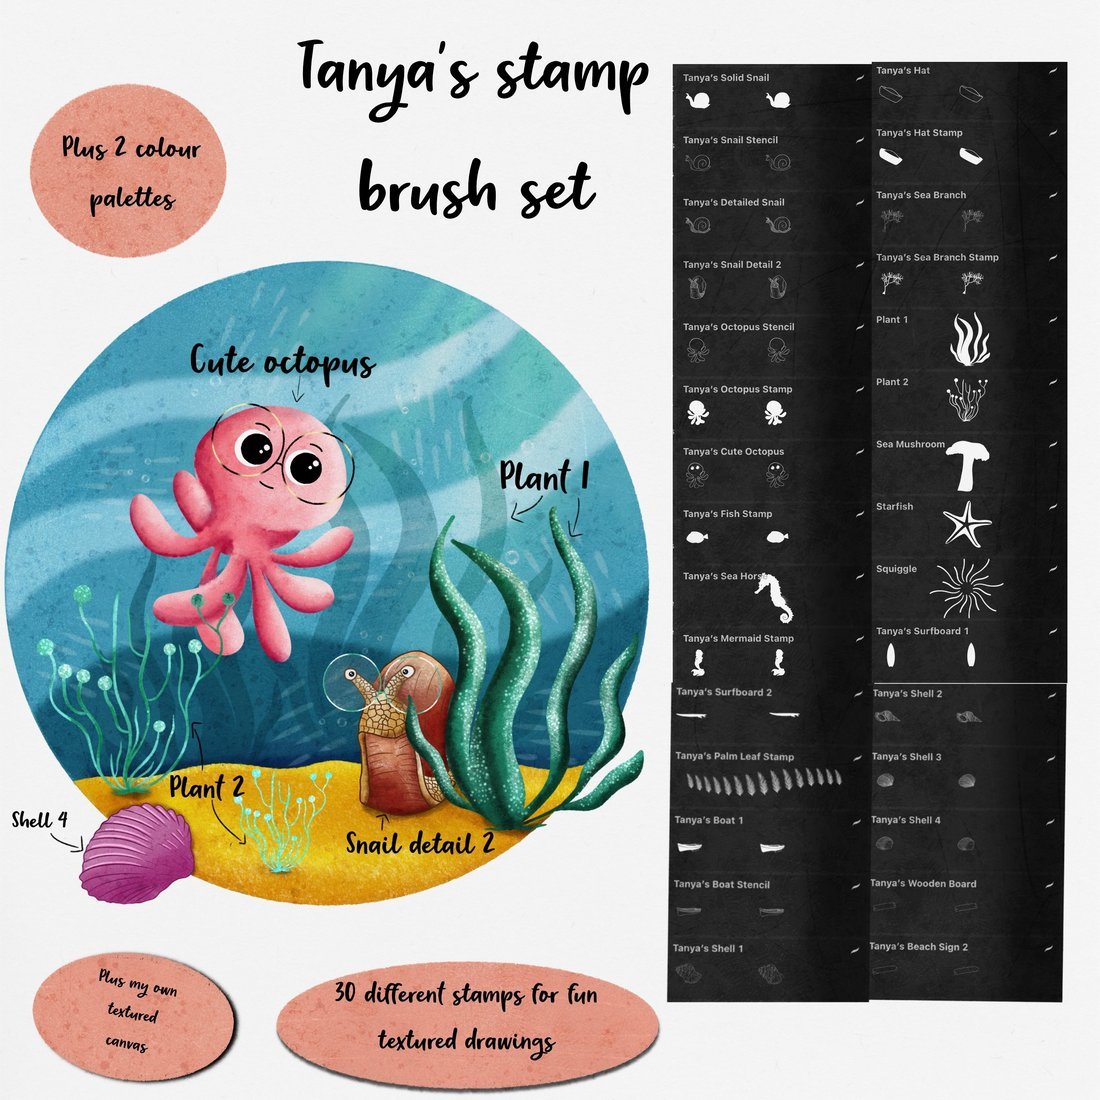 Tanya’s stamp brush set for Procreate (Free sample)